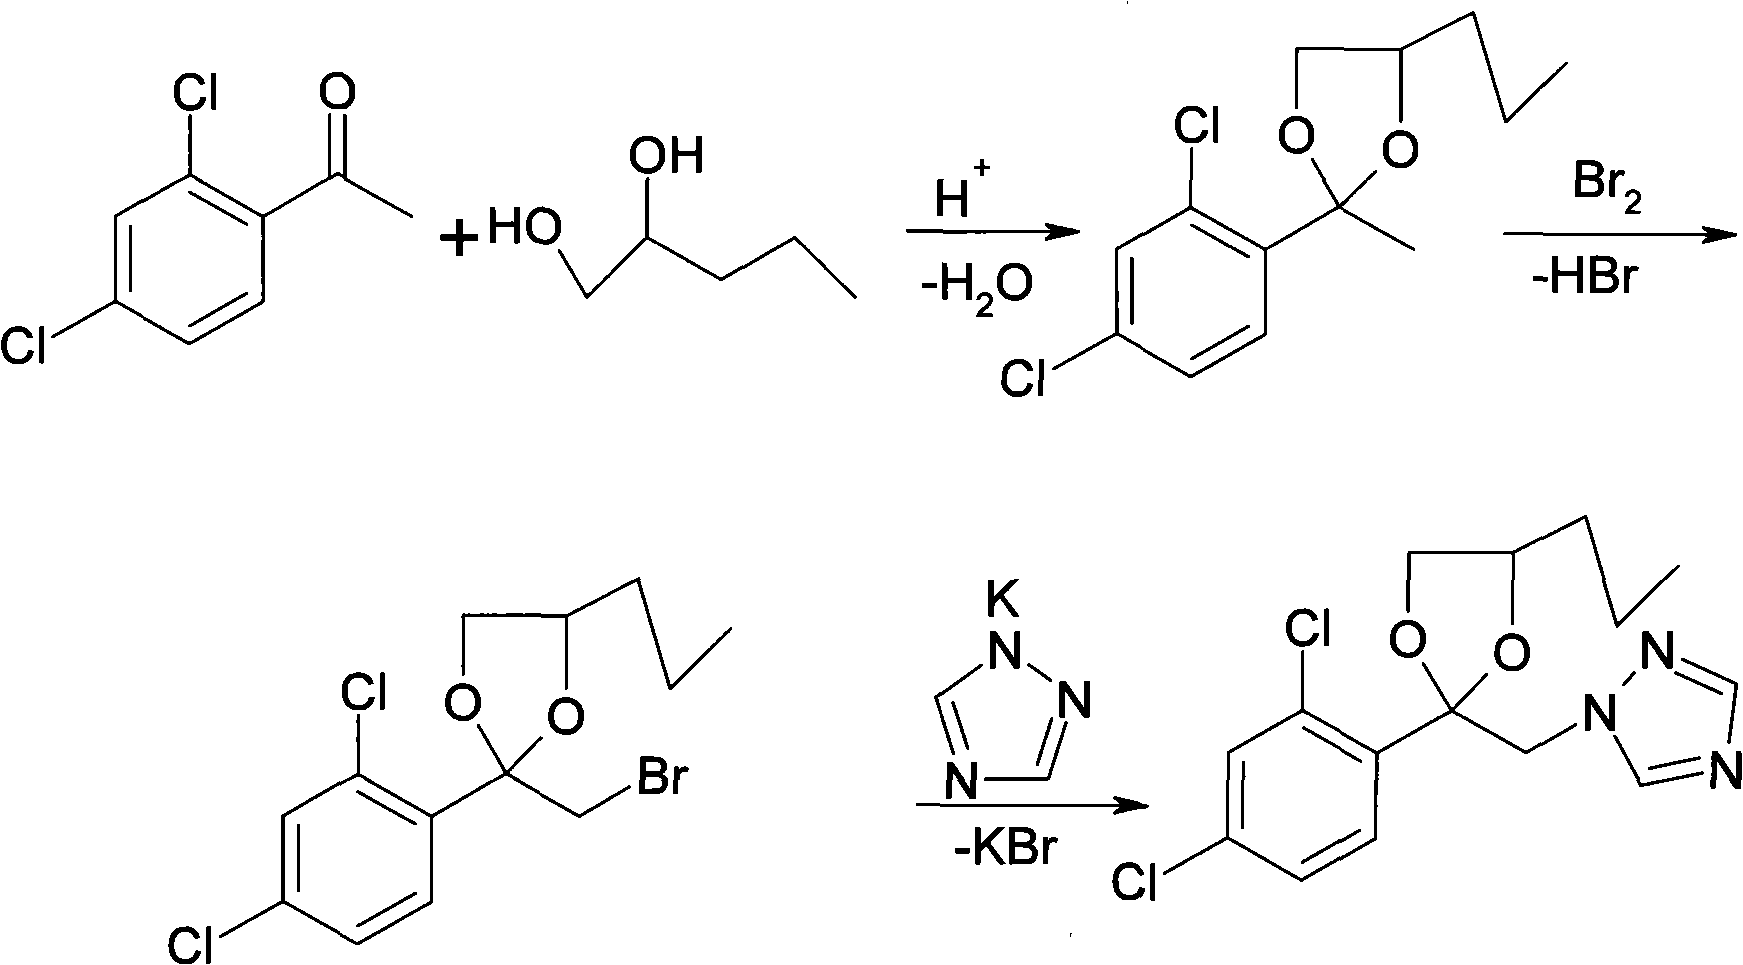 Preparation of bactericide propiconazole